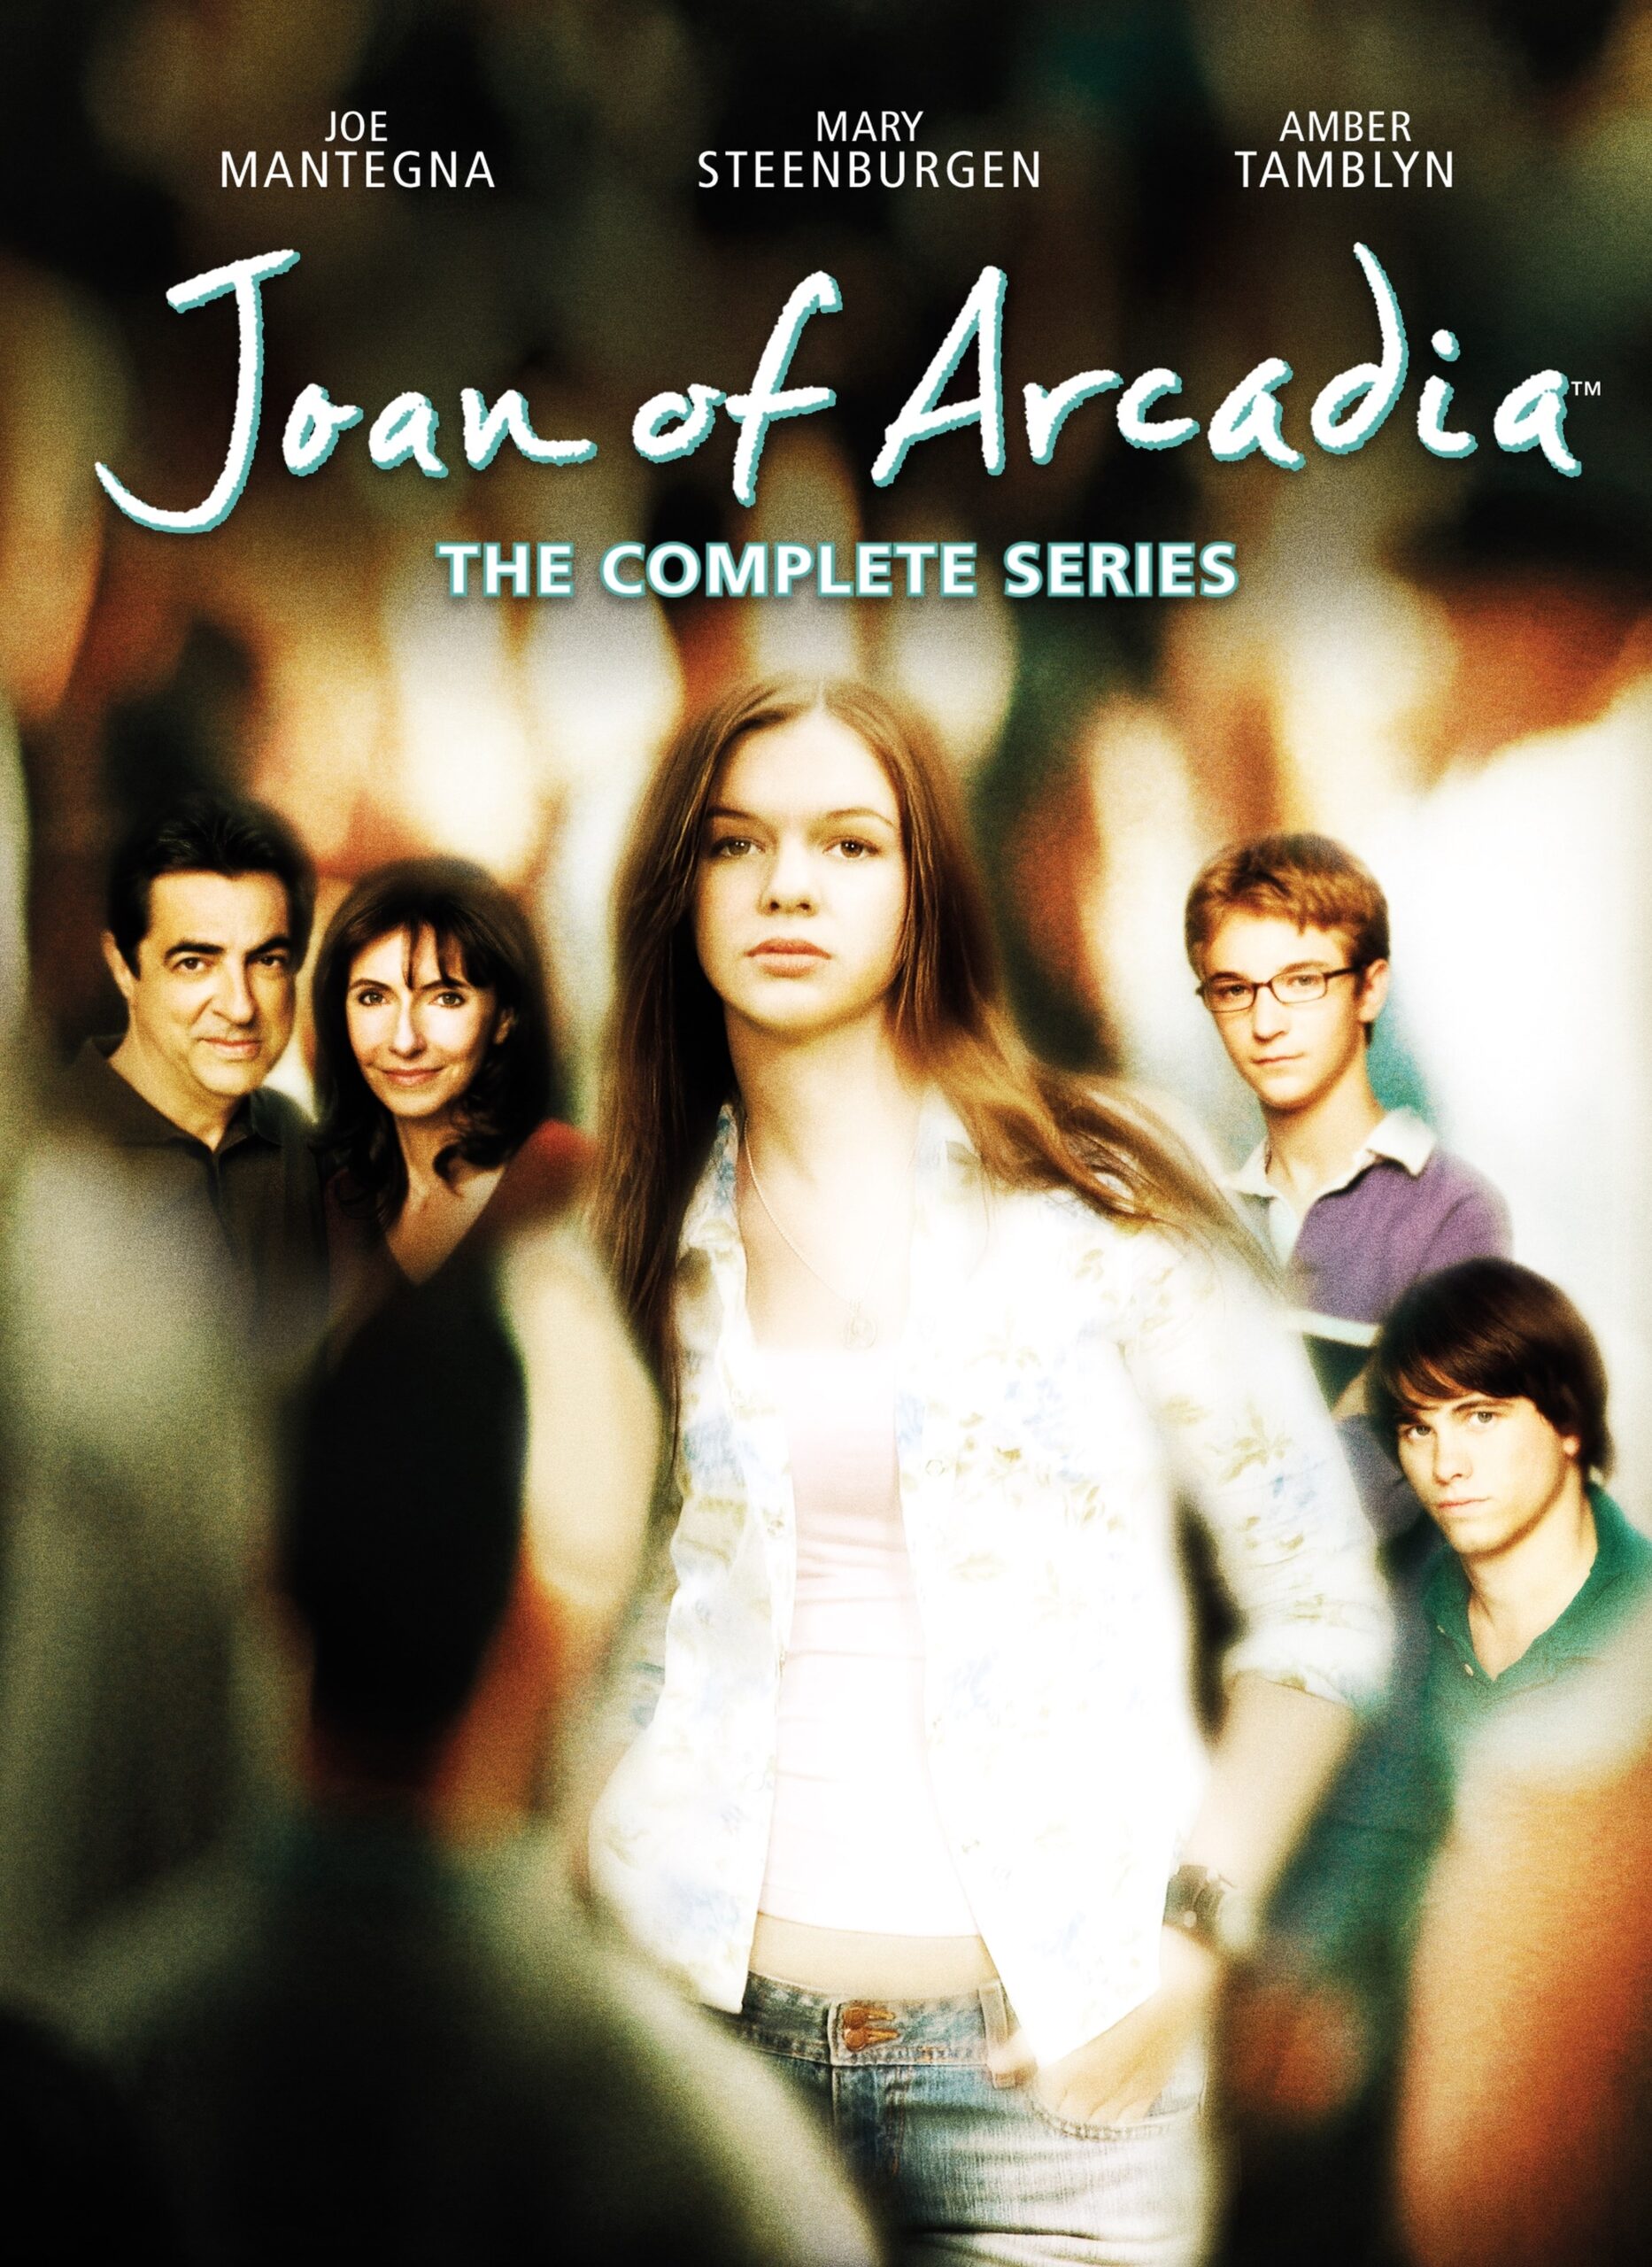 Joan of Arcadia